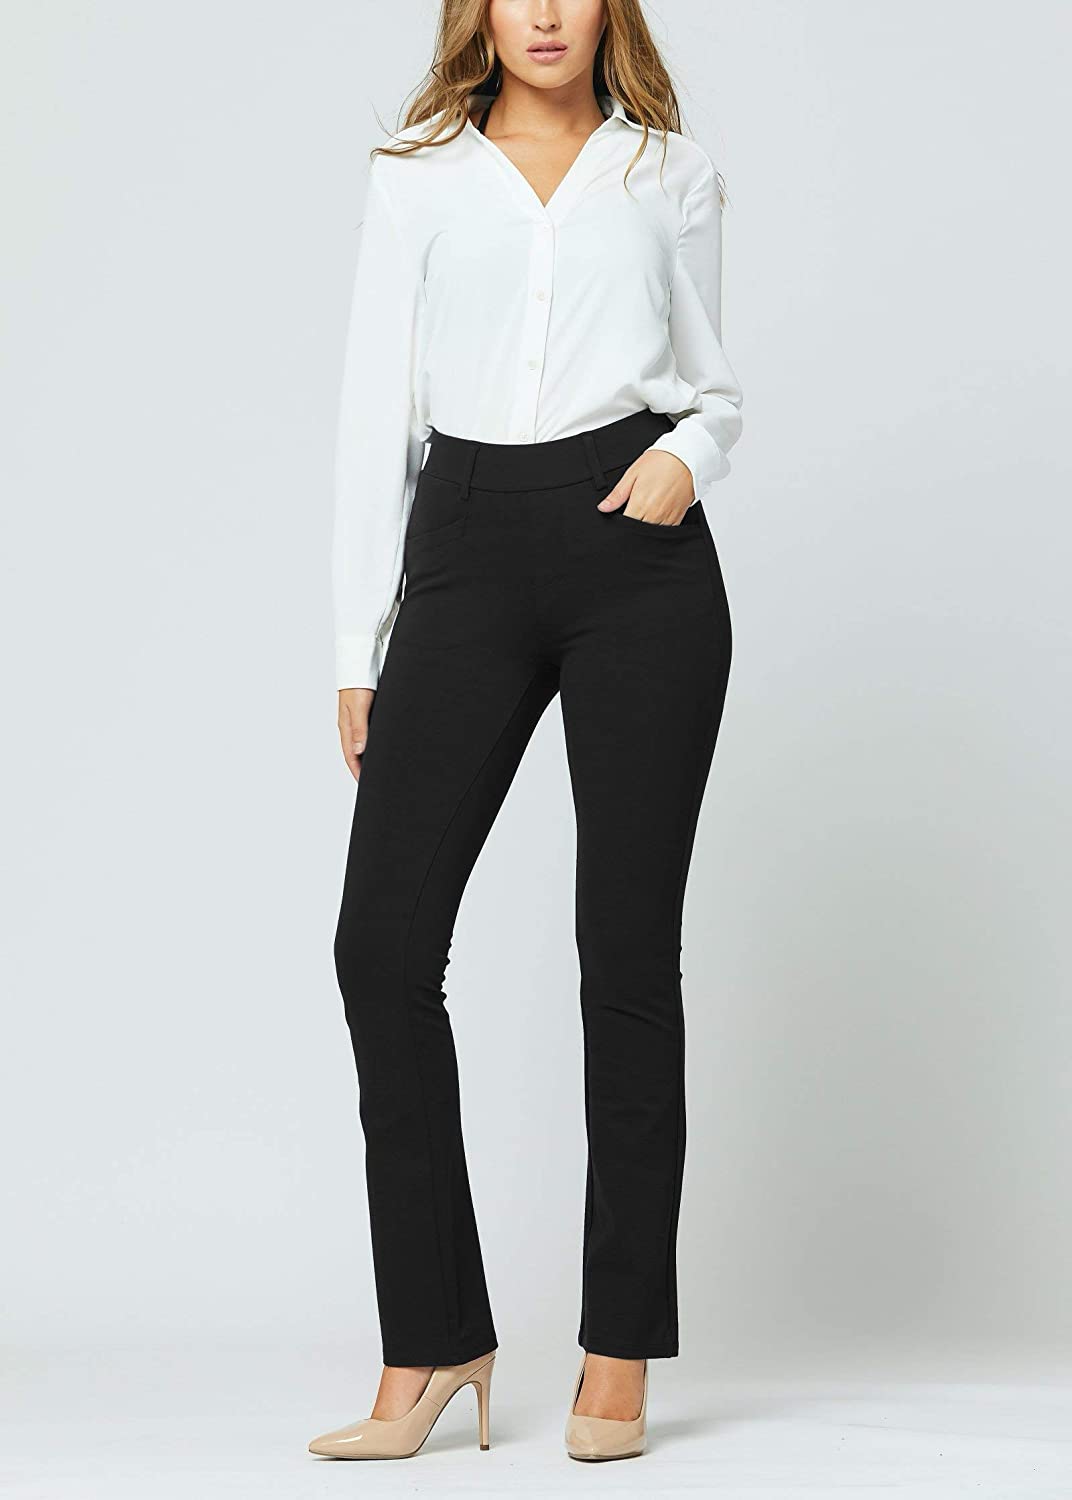 Premium Women's Stretch Dress Pants with Pockets - Wear to Work ...